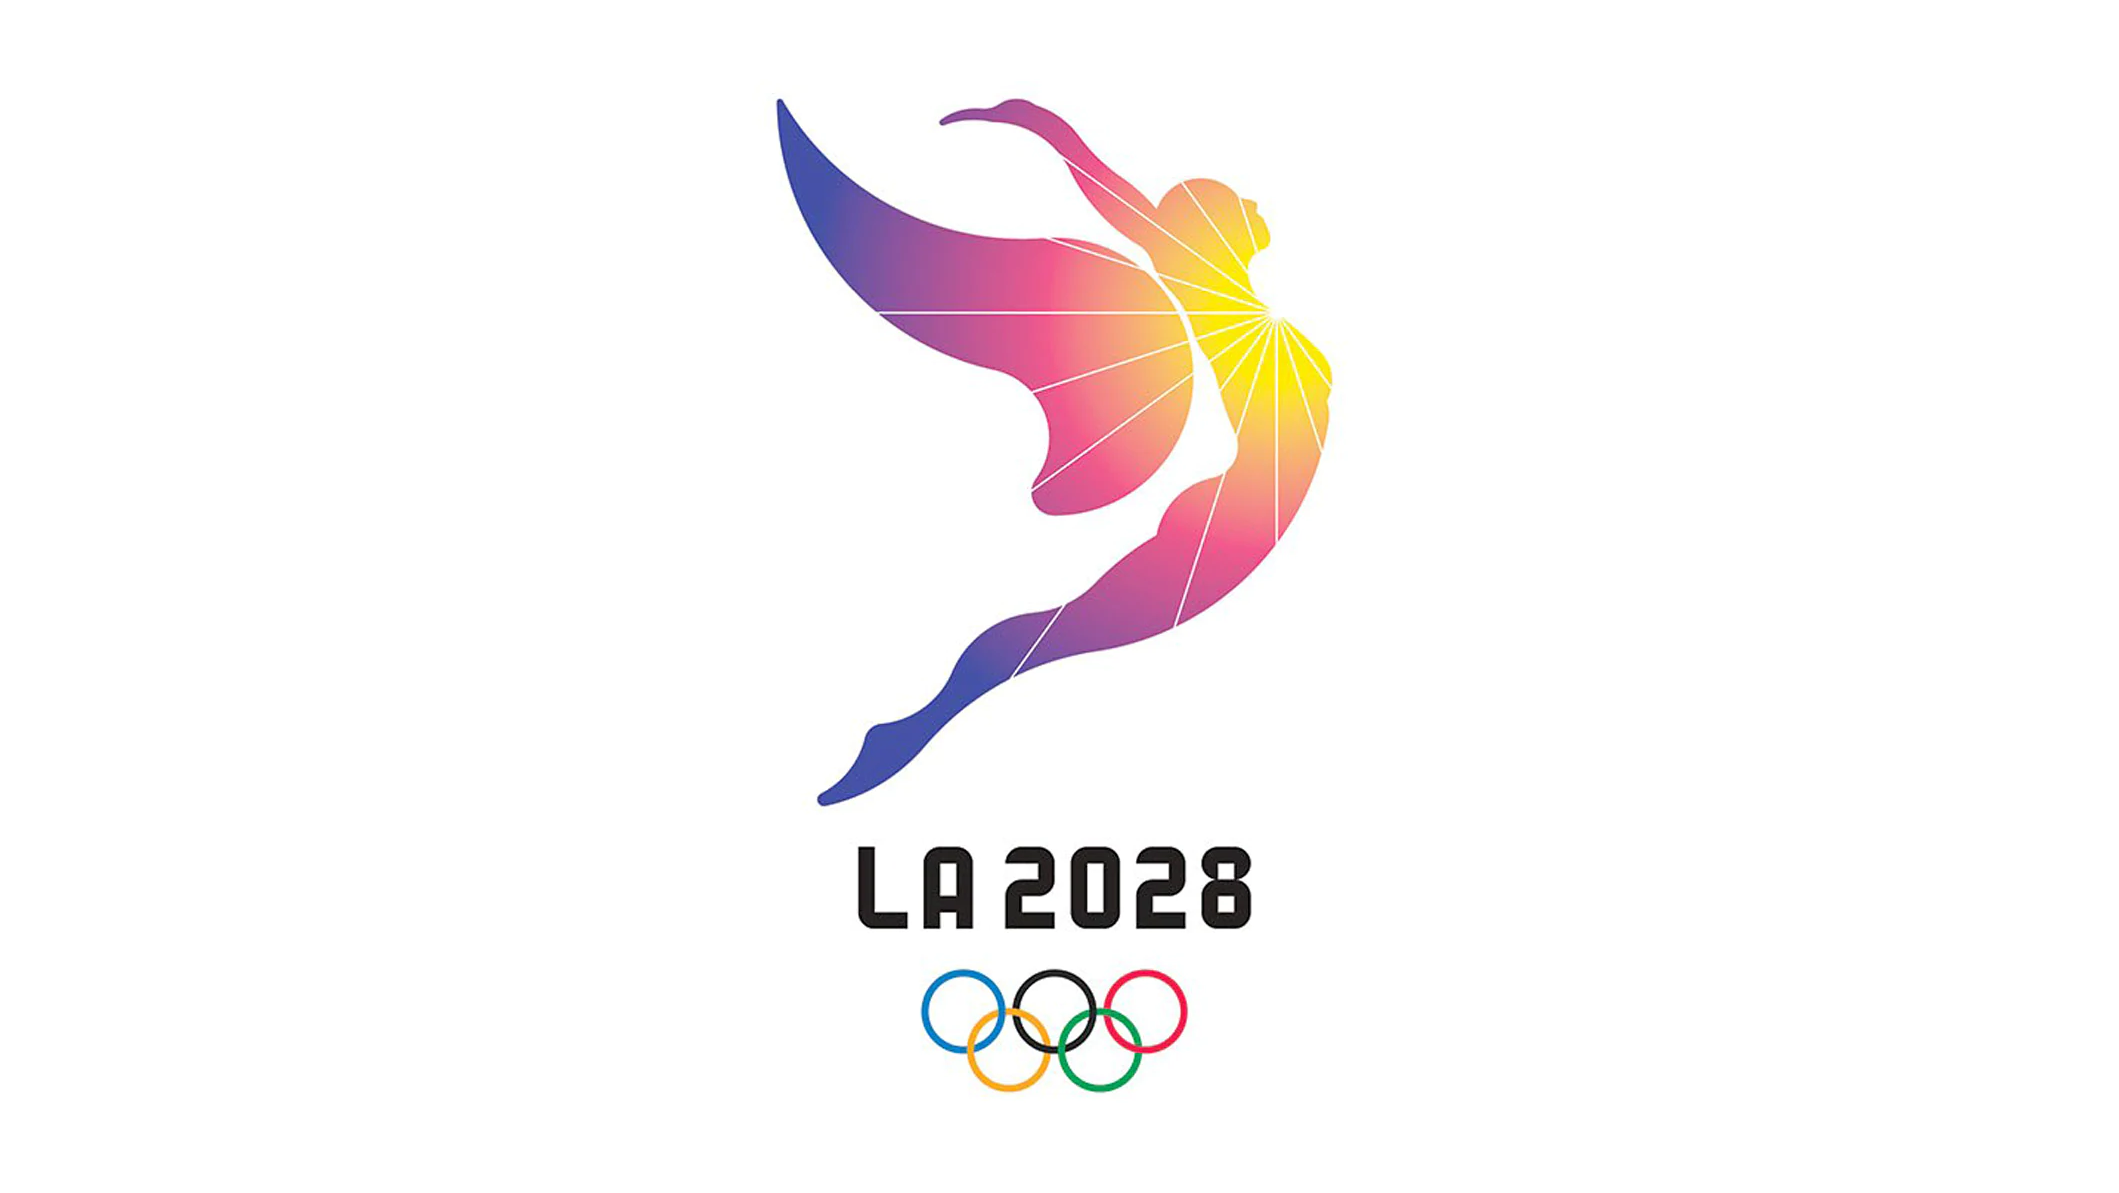 LA 2028 logo white background